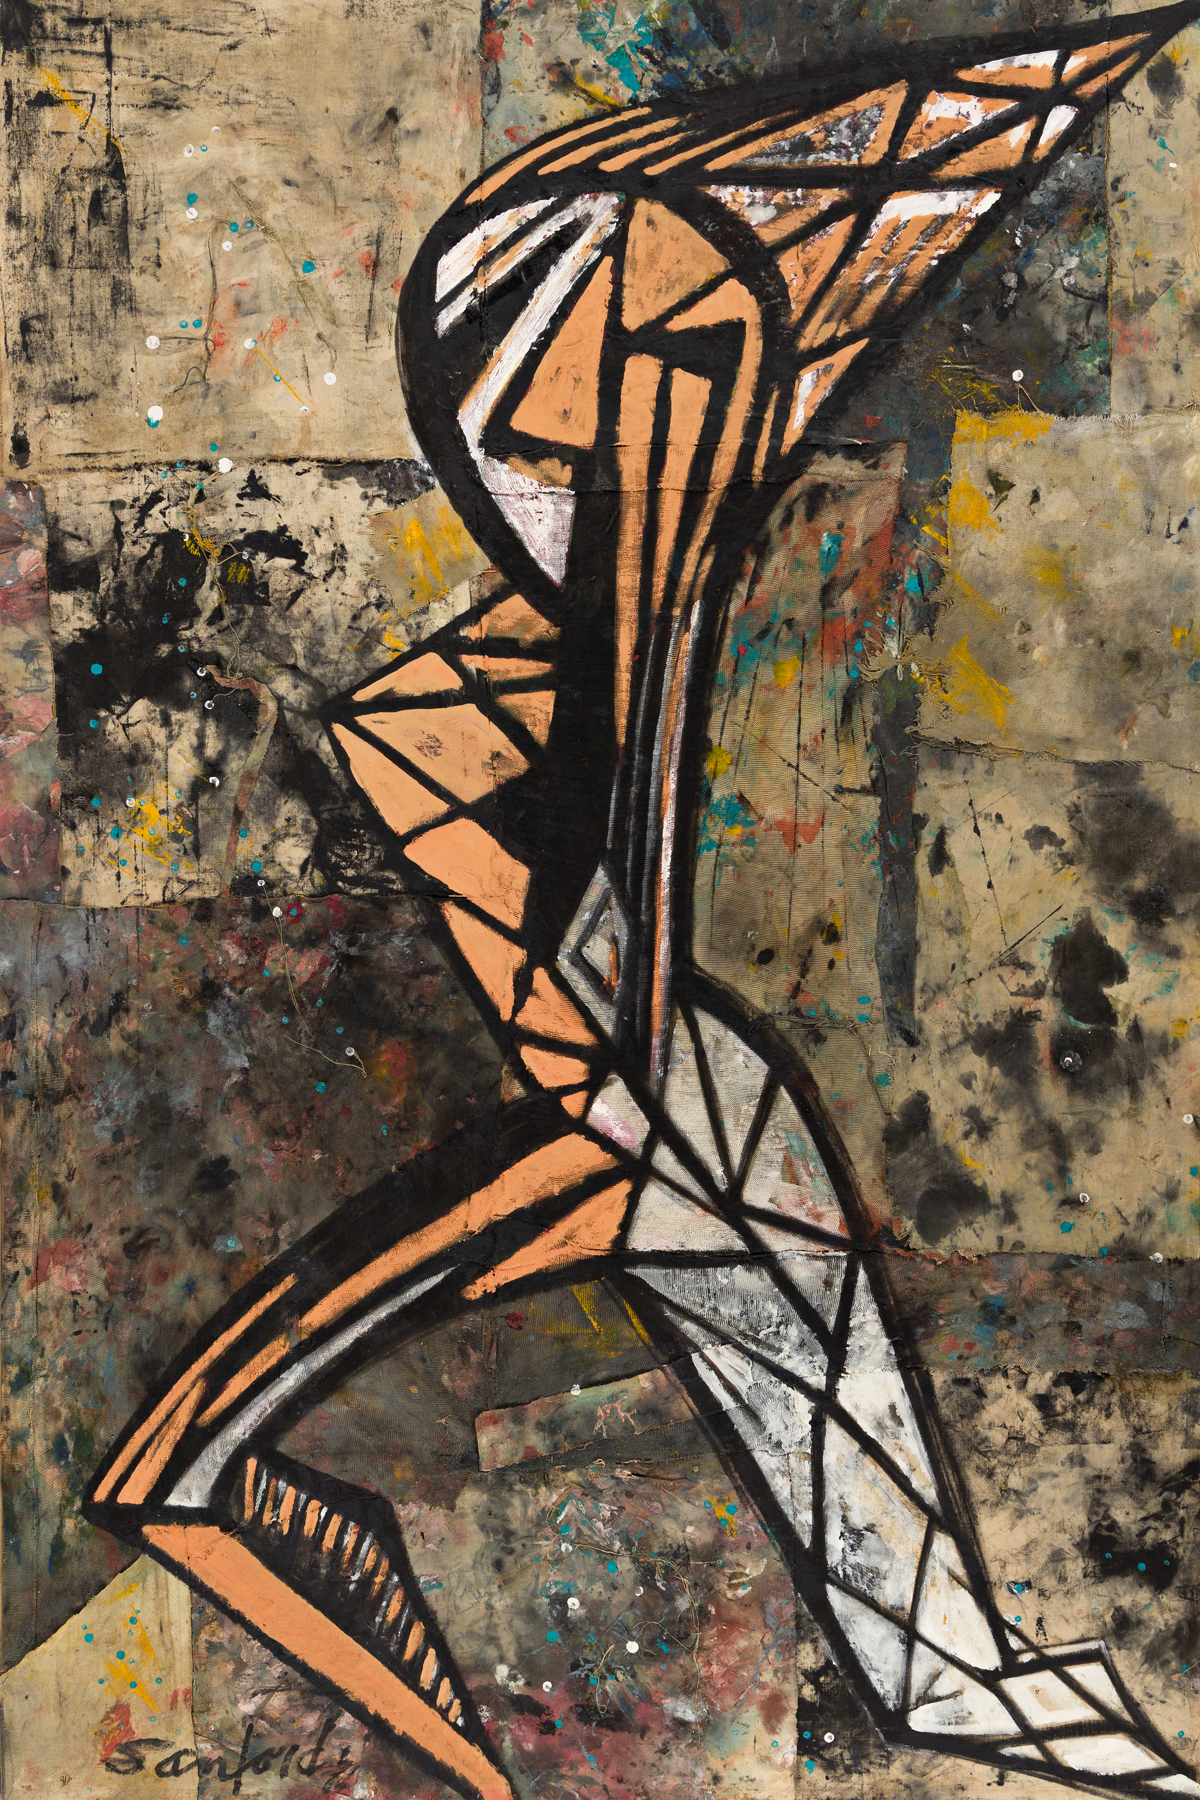 WALTER SANFORD (1912 - 1987) Untitled (Modernist Figure).